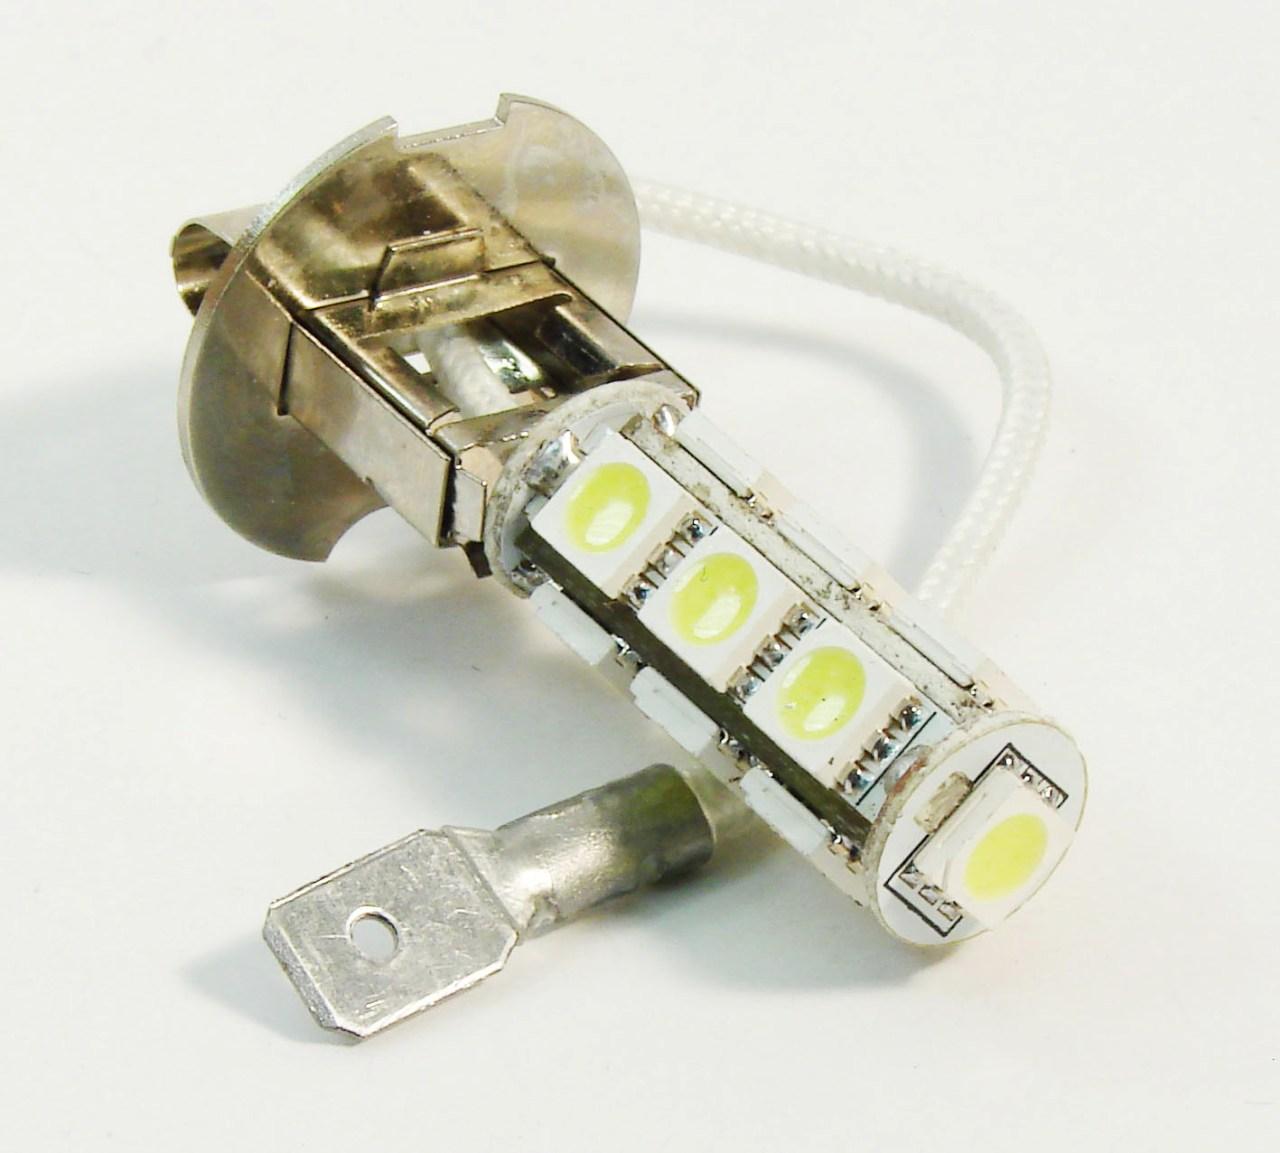   13 LED H3 13-5050-SMD LED Car Front Head Fog Light Headlight Bulb Pure White